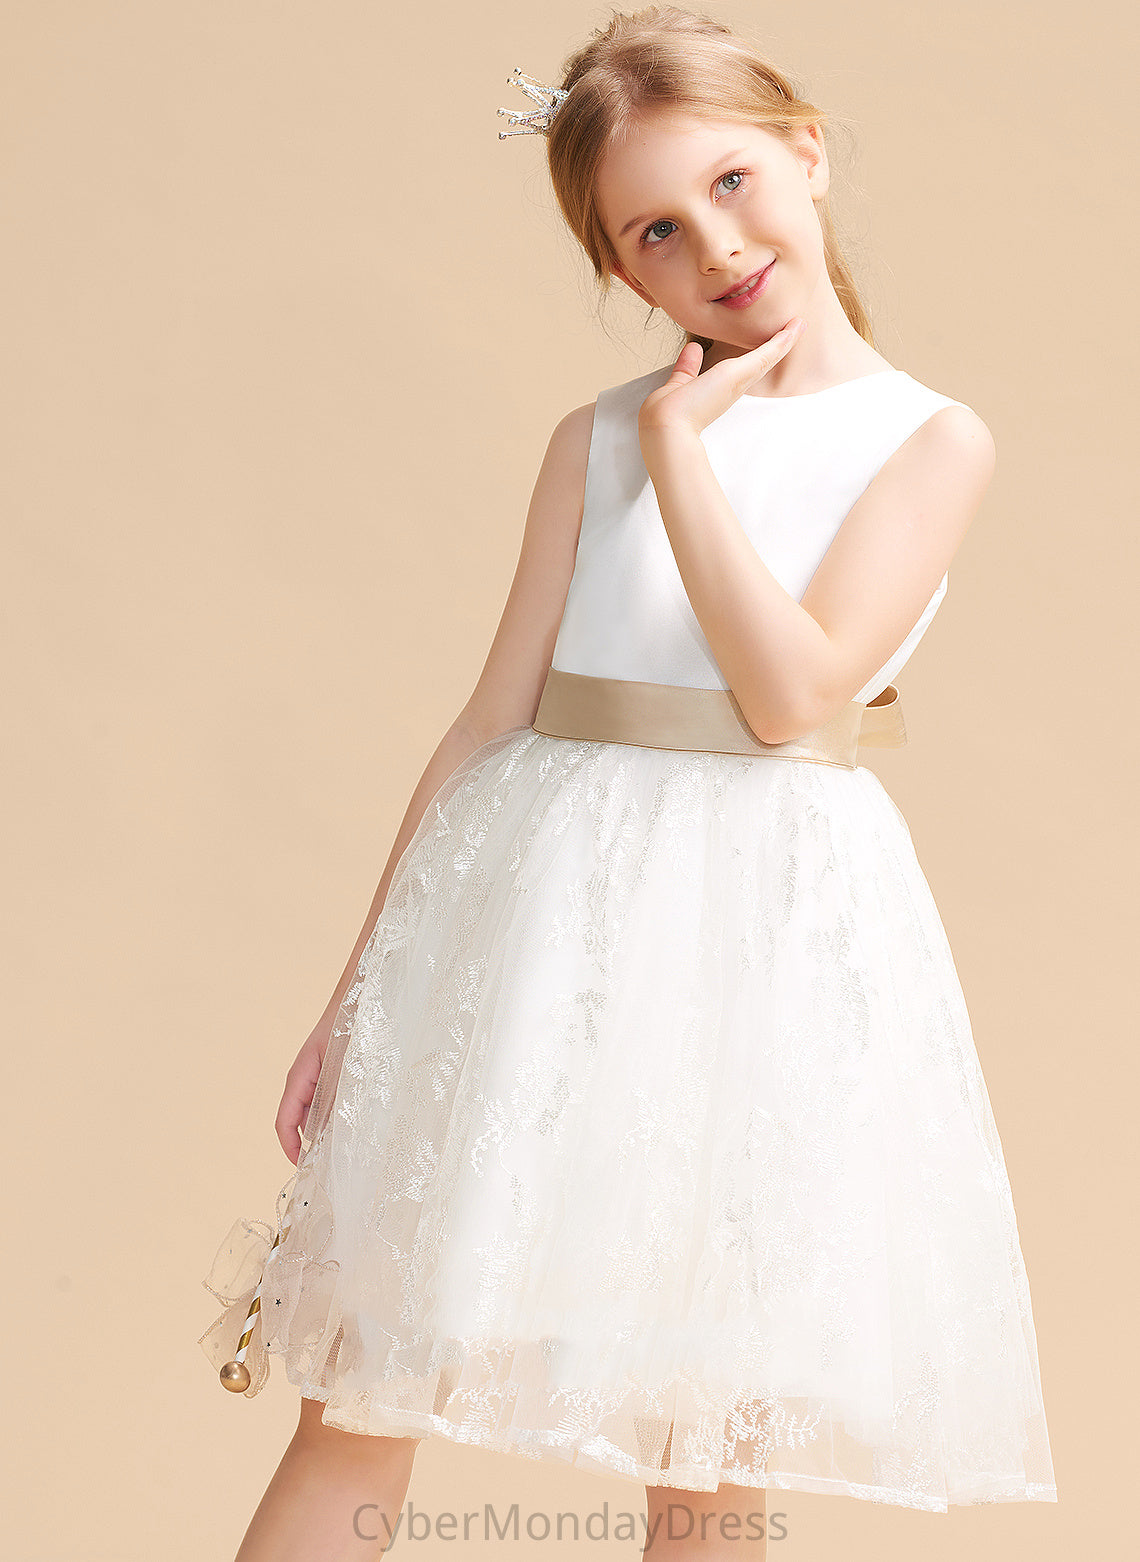 Satin/Lace Girl A-Line/Princess - Scoop Flower Girl Dresses Neck Flower With Aleah Dress Sash Sleeveless Knee-length